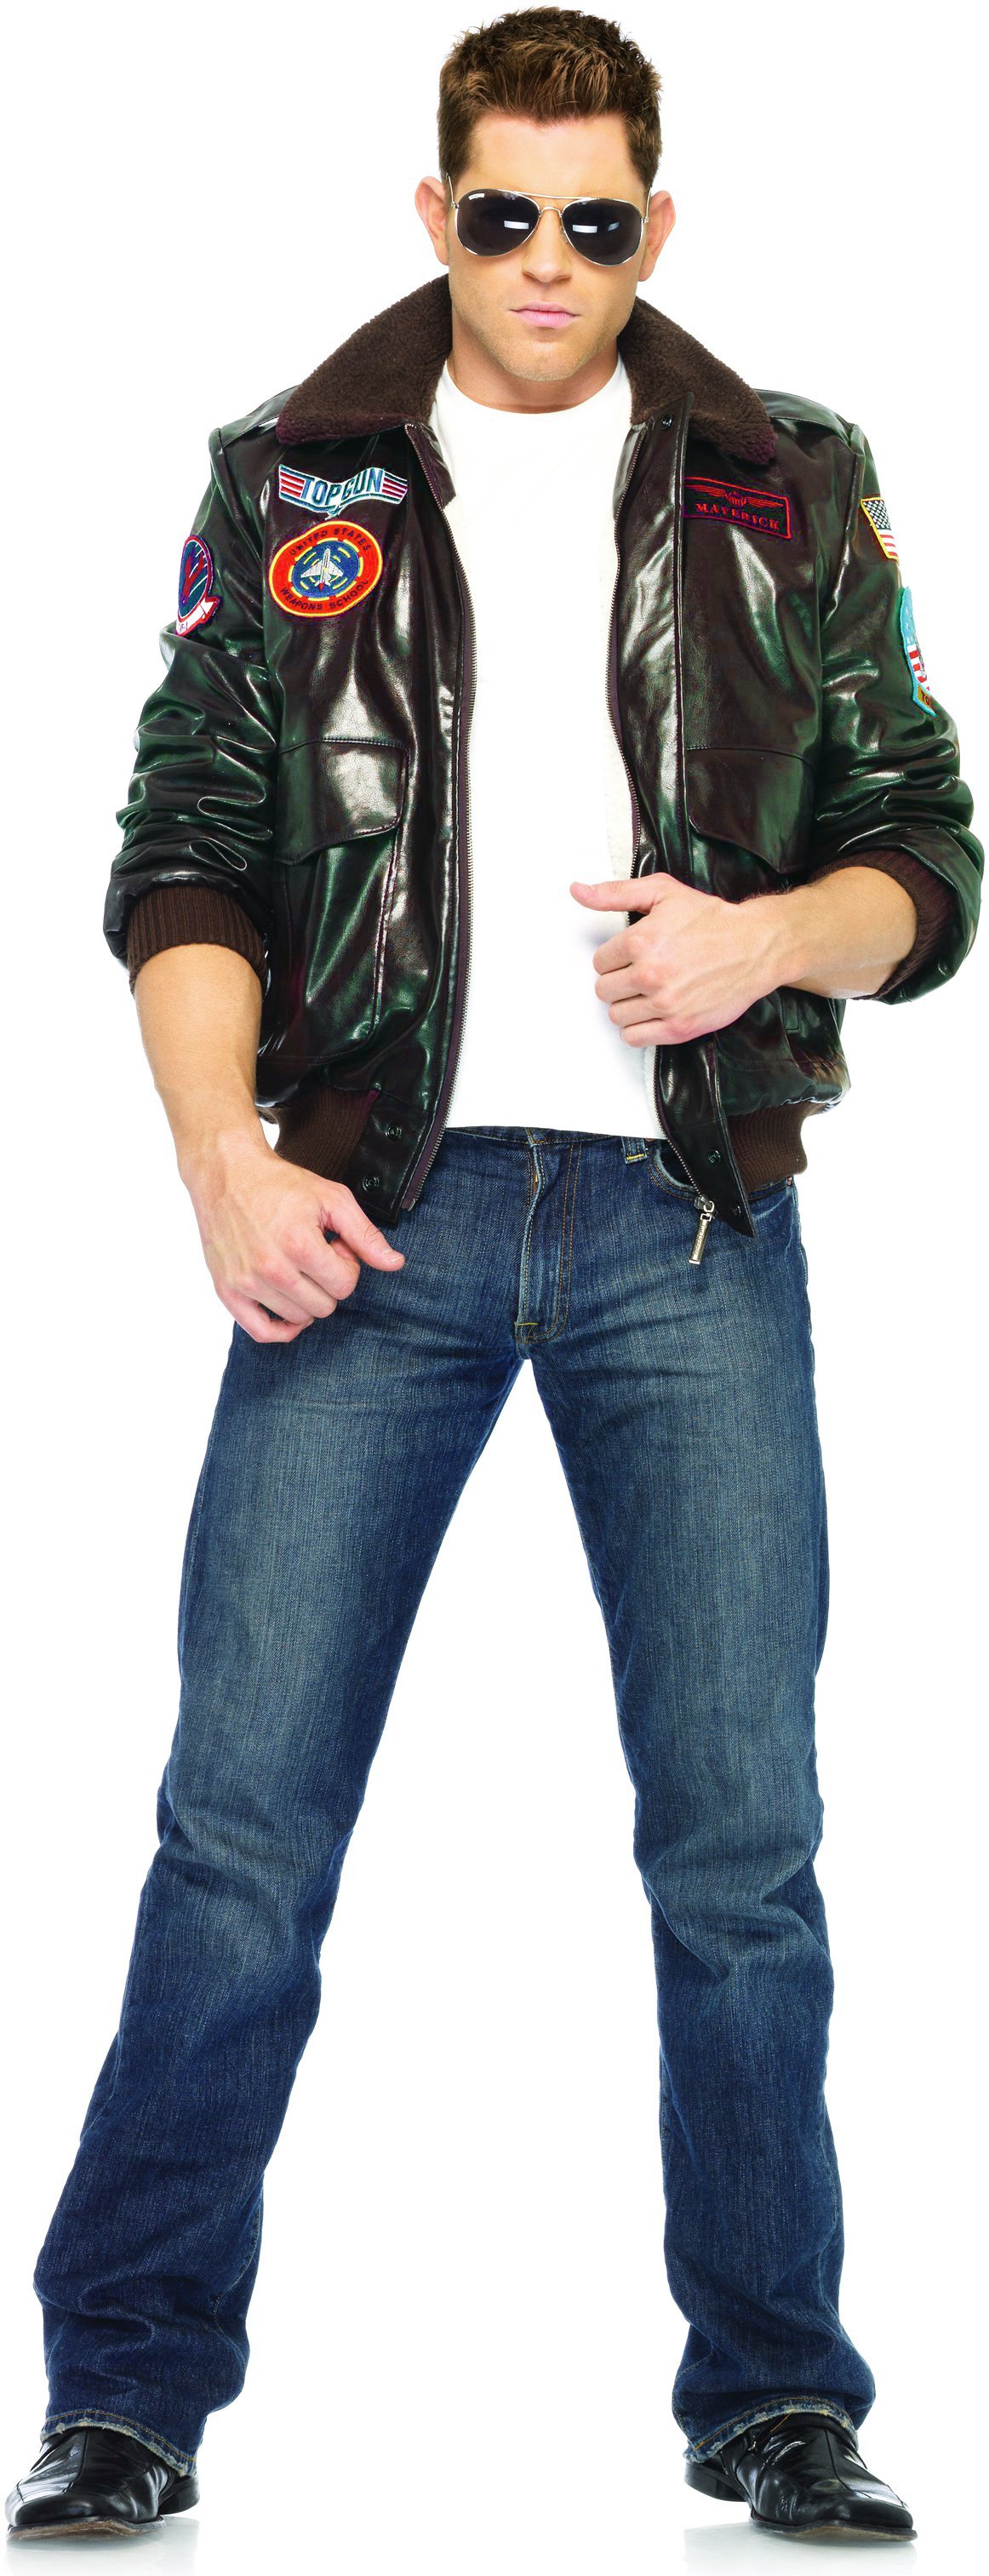 Top Gun Bomber Jacket Adult Costume (Male)